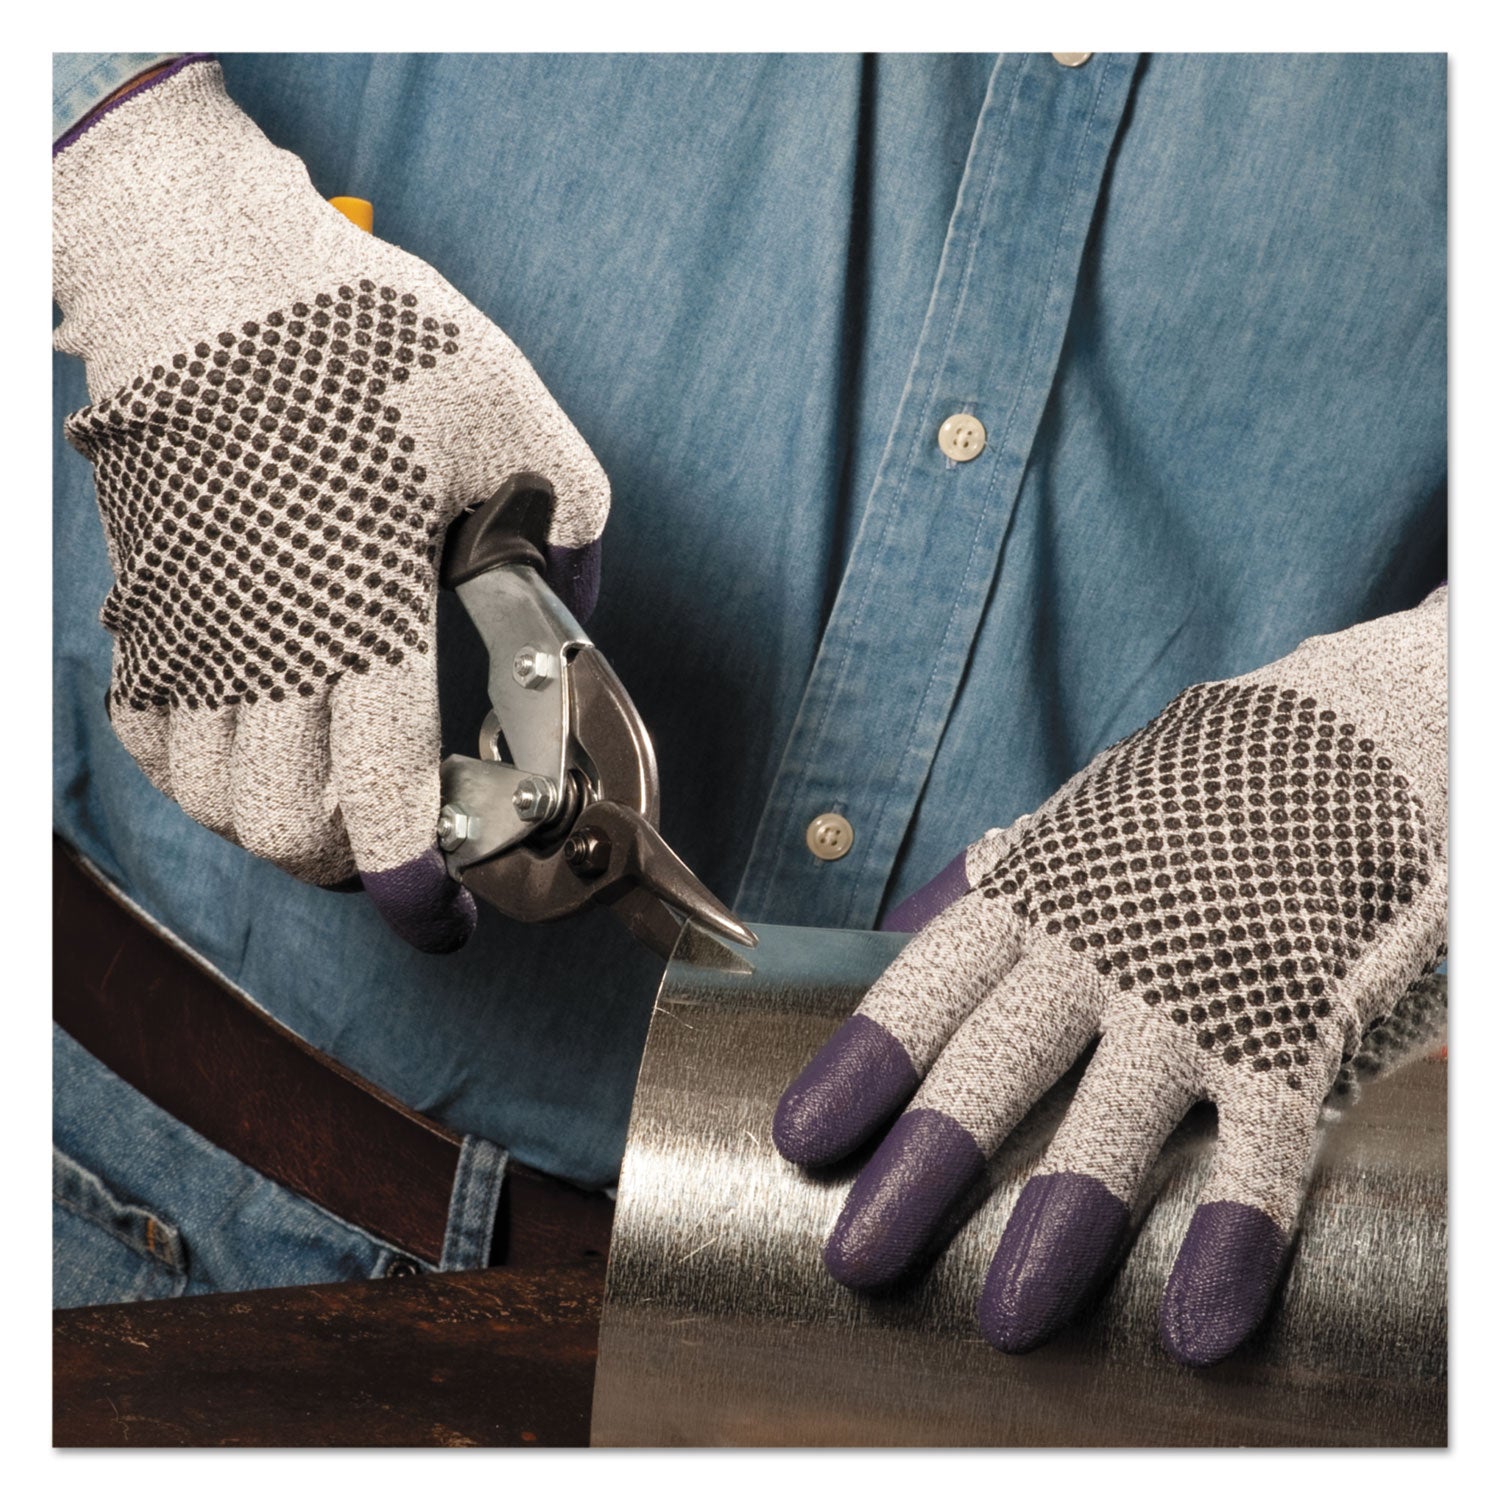 g60-purple-nitrile-gloves-240-mm-length-large-size-9-black-white-pair_kcc97432 - 3